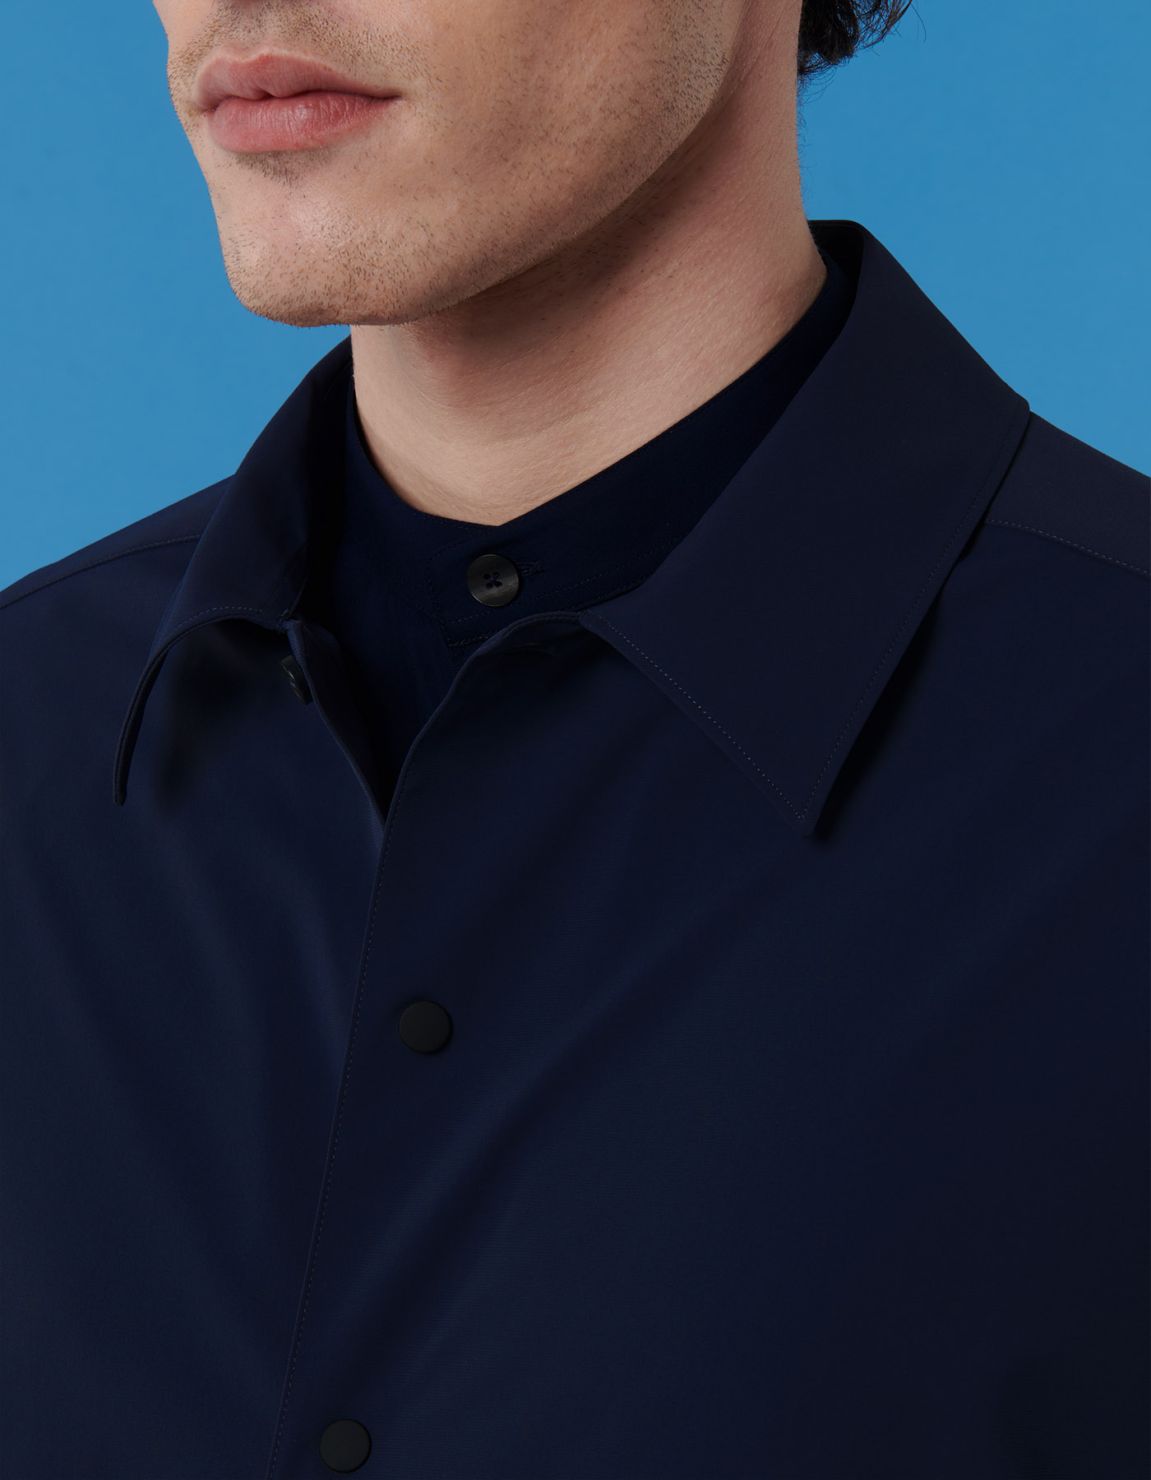 Dark Blue Textured Solid colour Shirt Collar spread Over 2